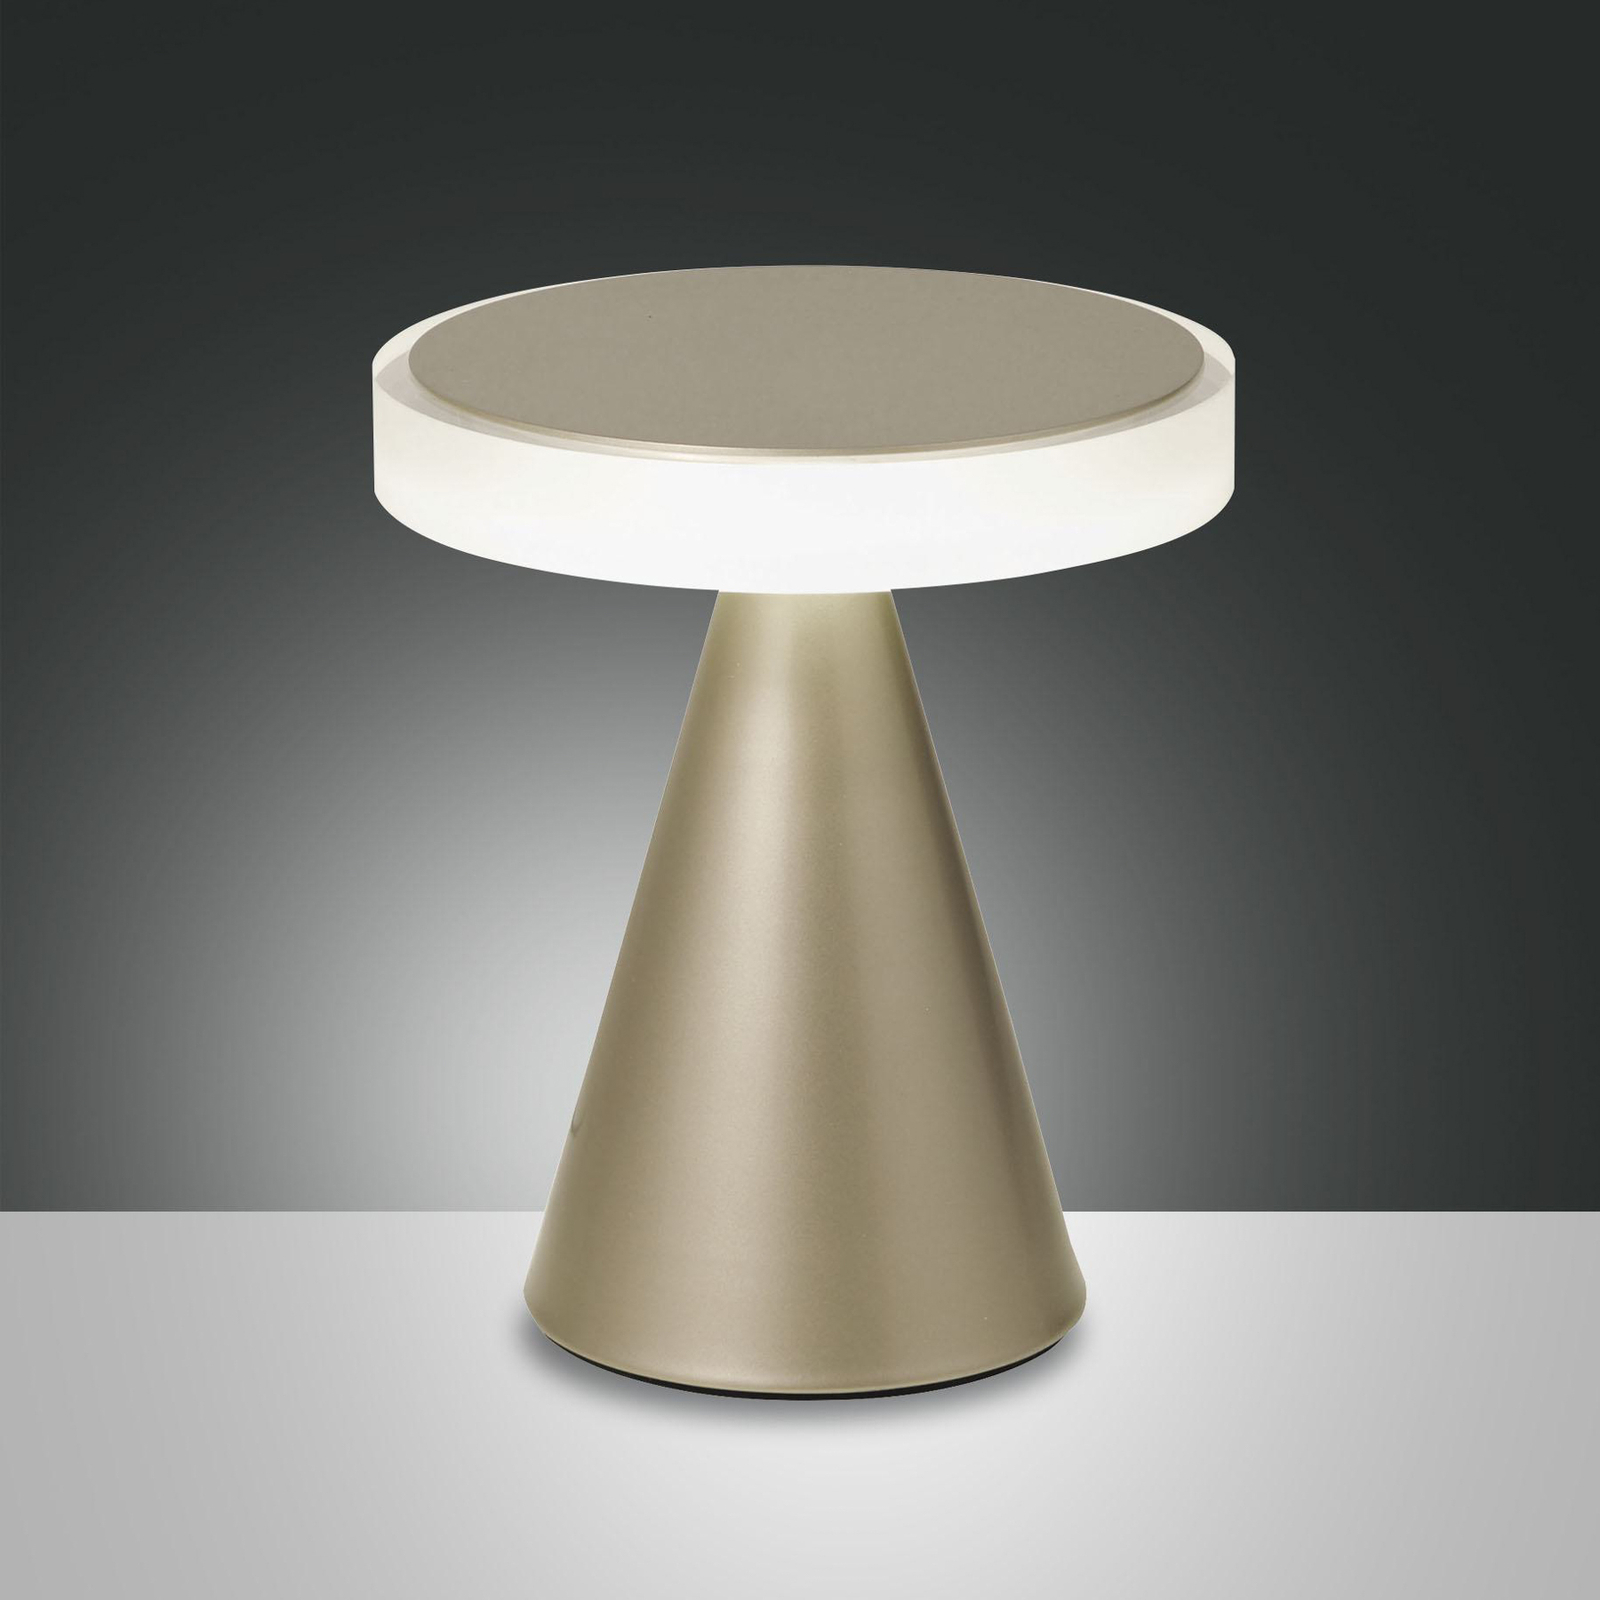 Candeeiro de mesa Neutra LED, altura 20 cm, dourado mate, regulador de